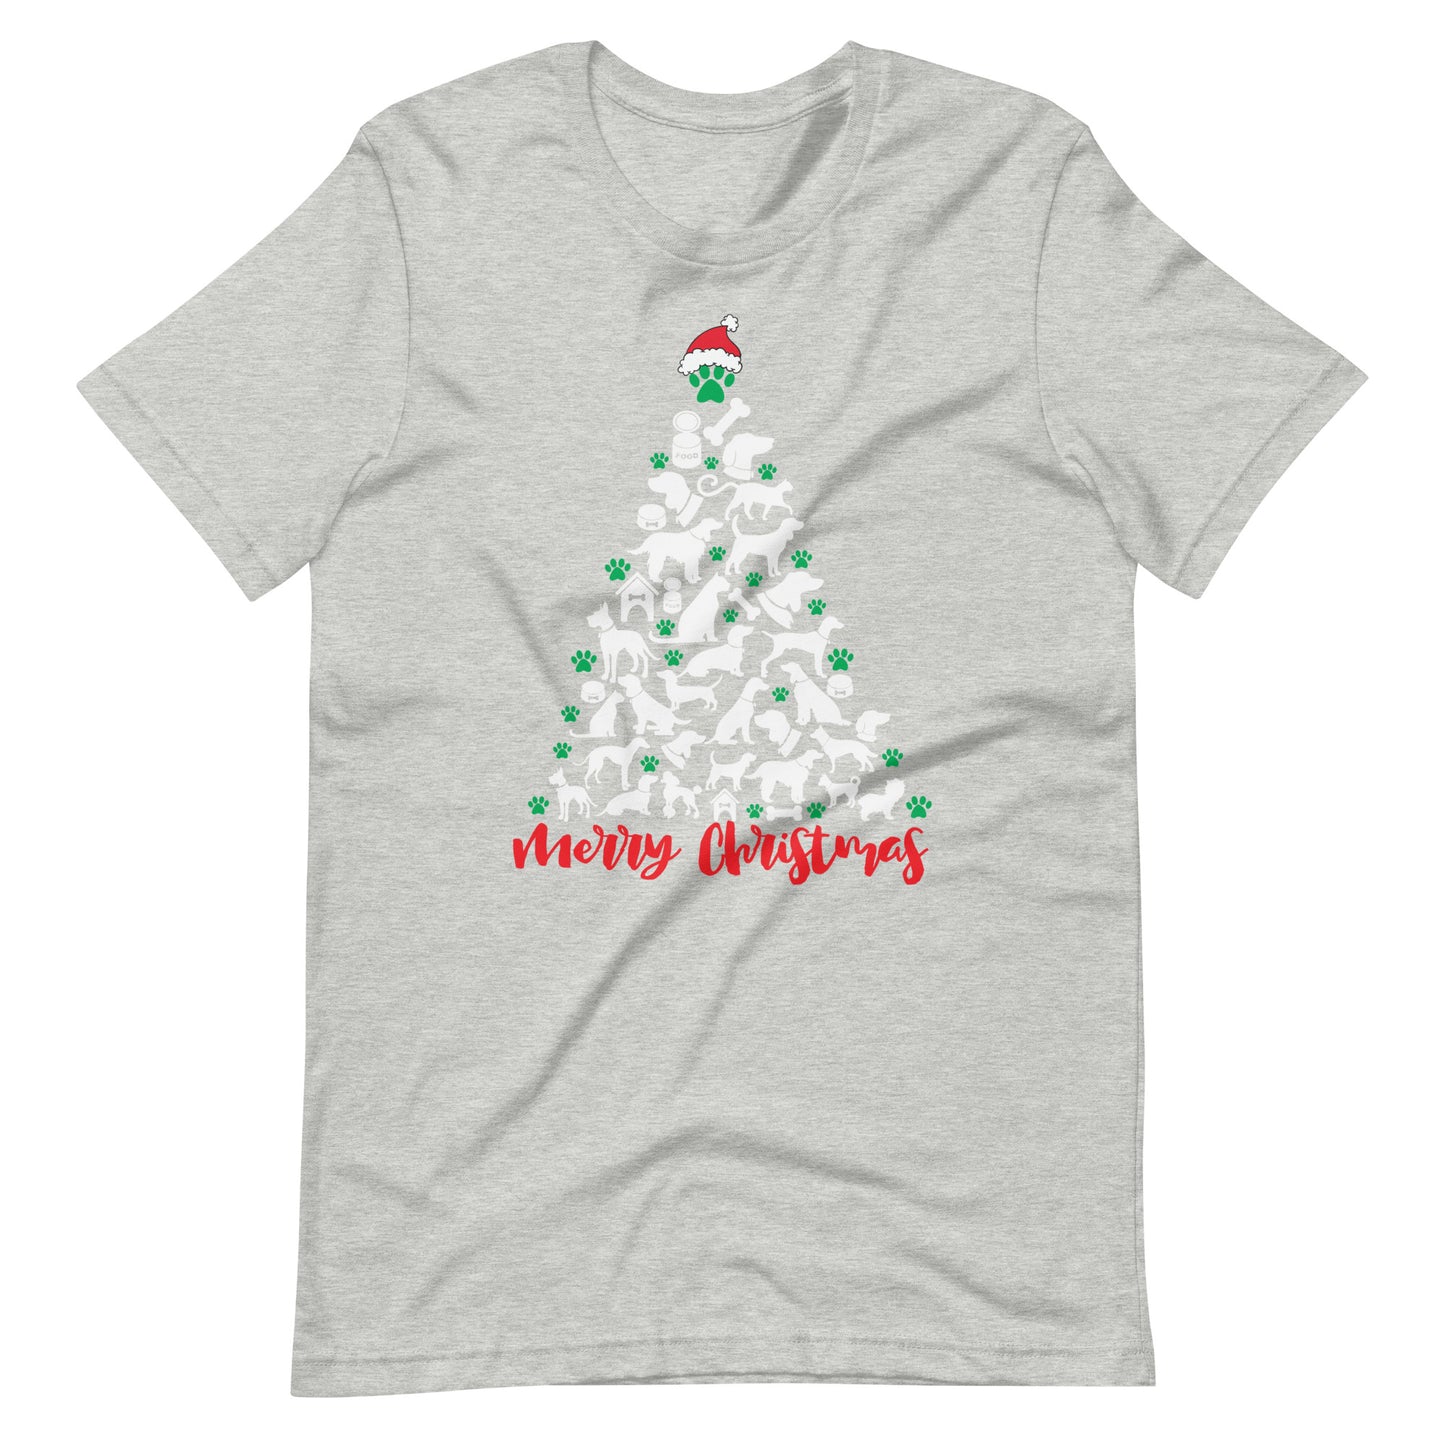 Merry Christmas for Dog Lovers Unisex t-shirt